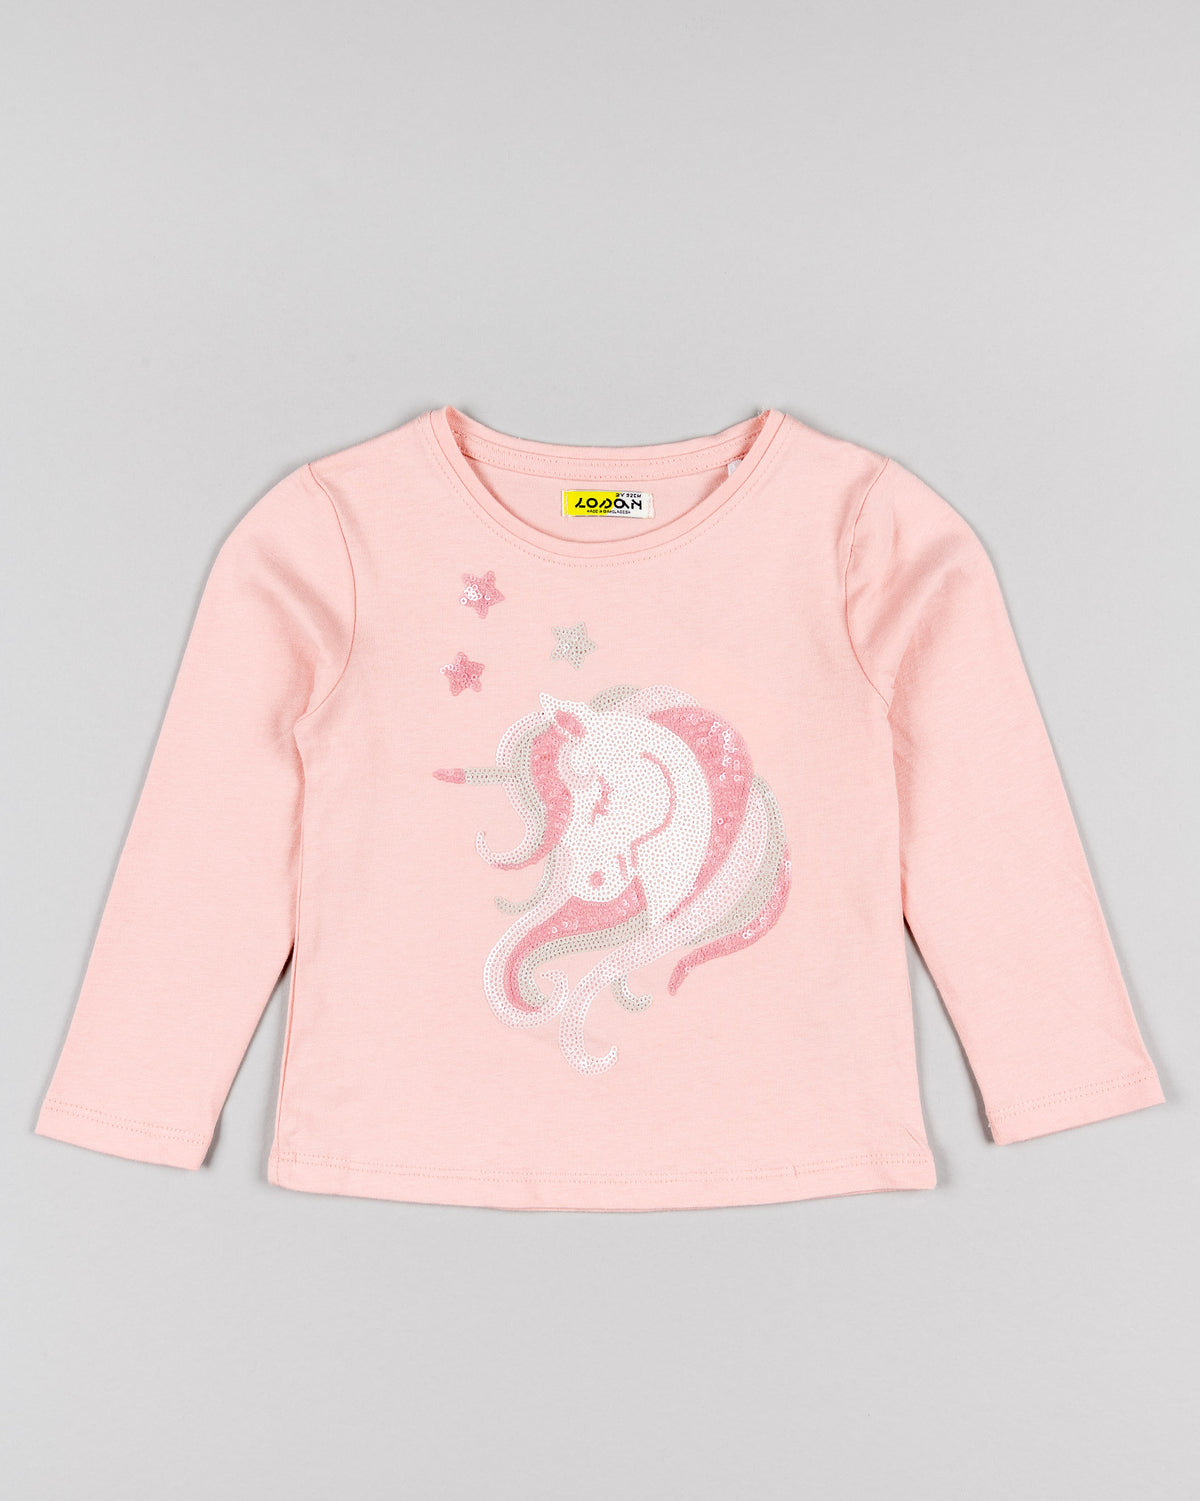 Camiseta Light Pink Unicornio